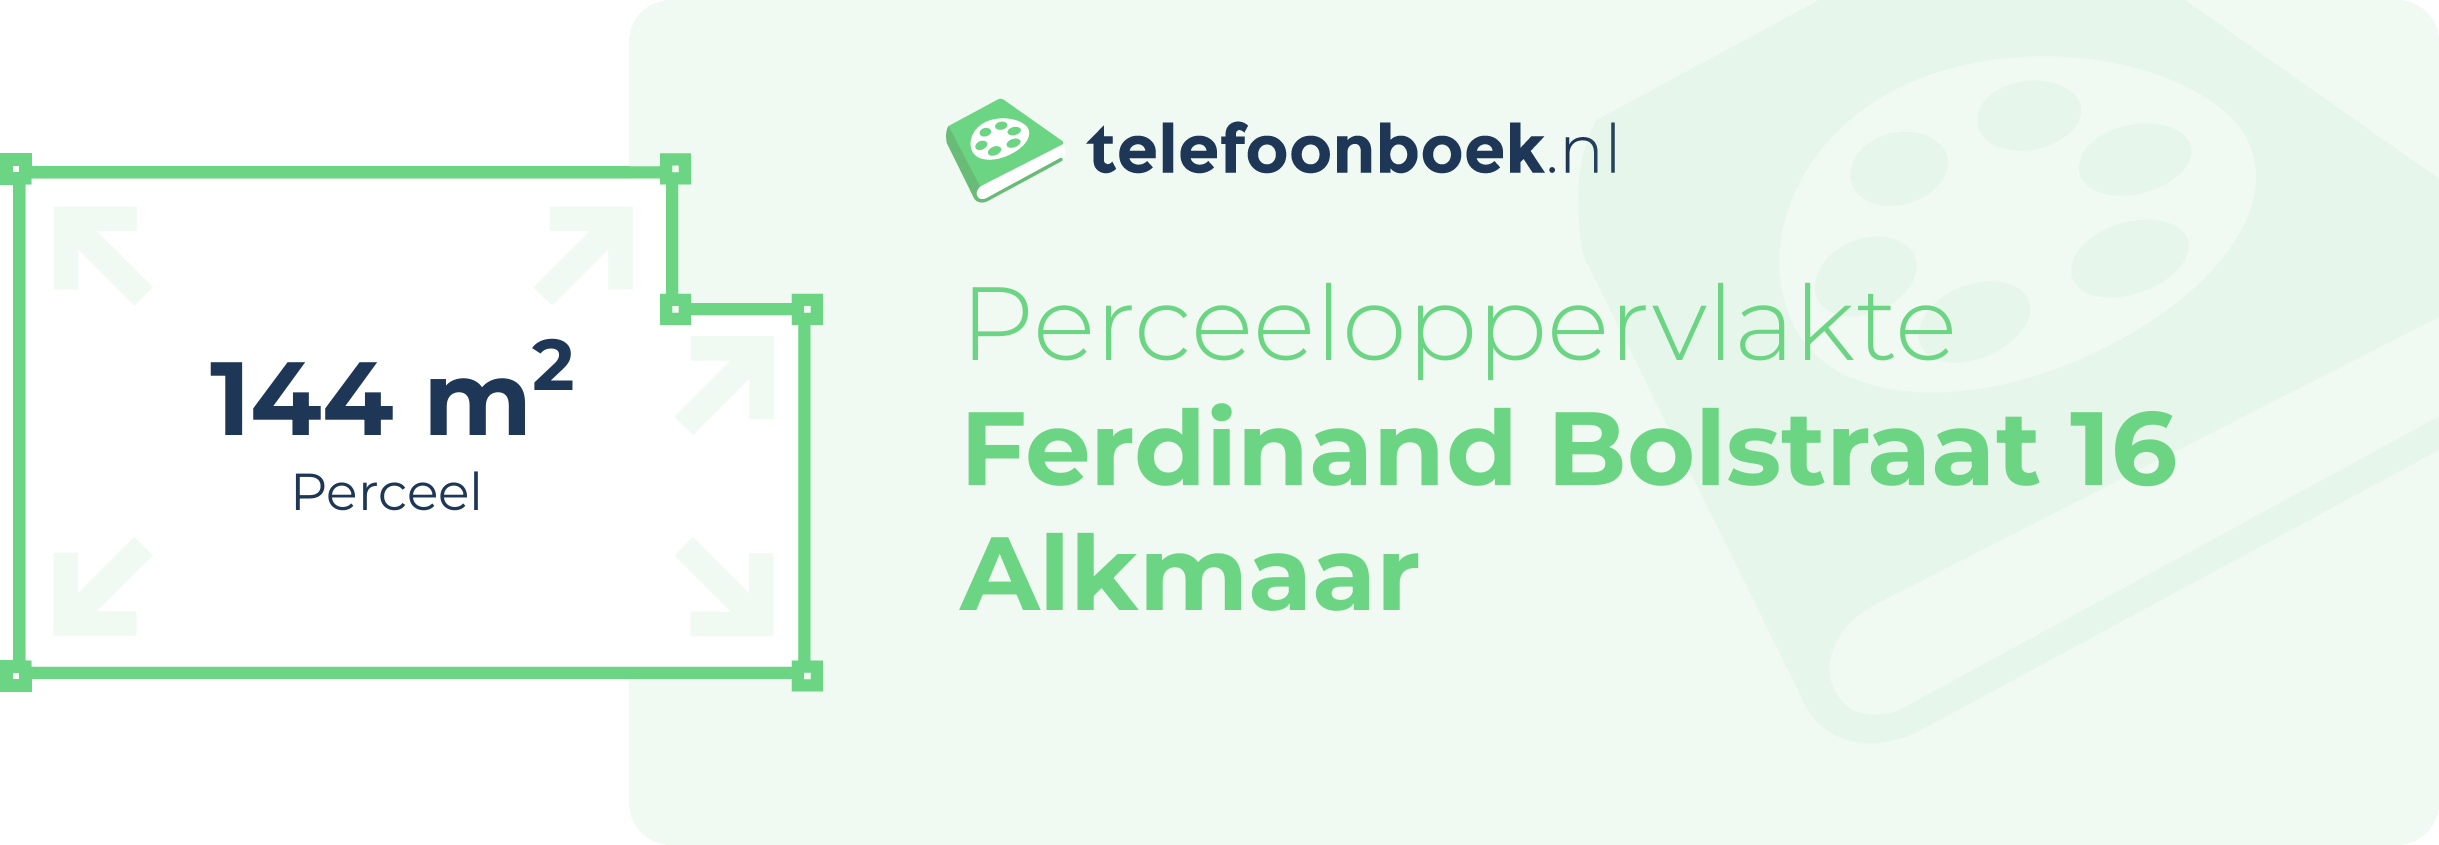 Perceeloppervlakte Ferdinand Bolstraat 16 Alkmaar